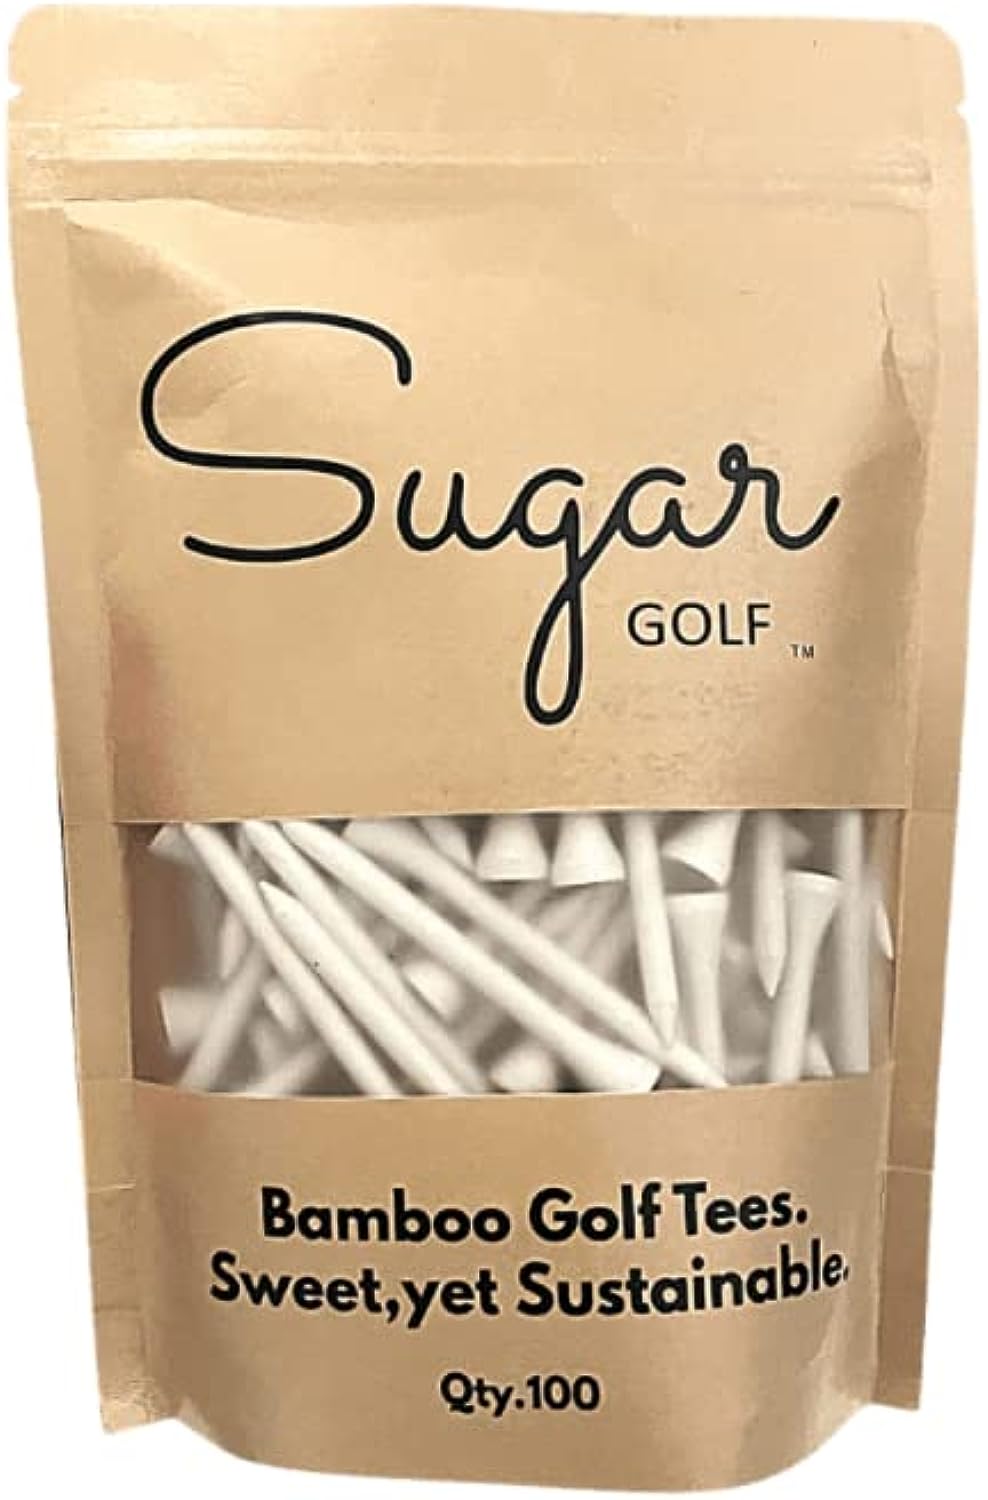 Sugar Golf Biodegradable Bamboo Golf Tees Review